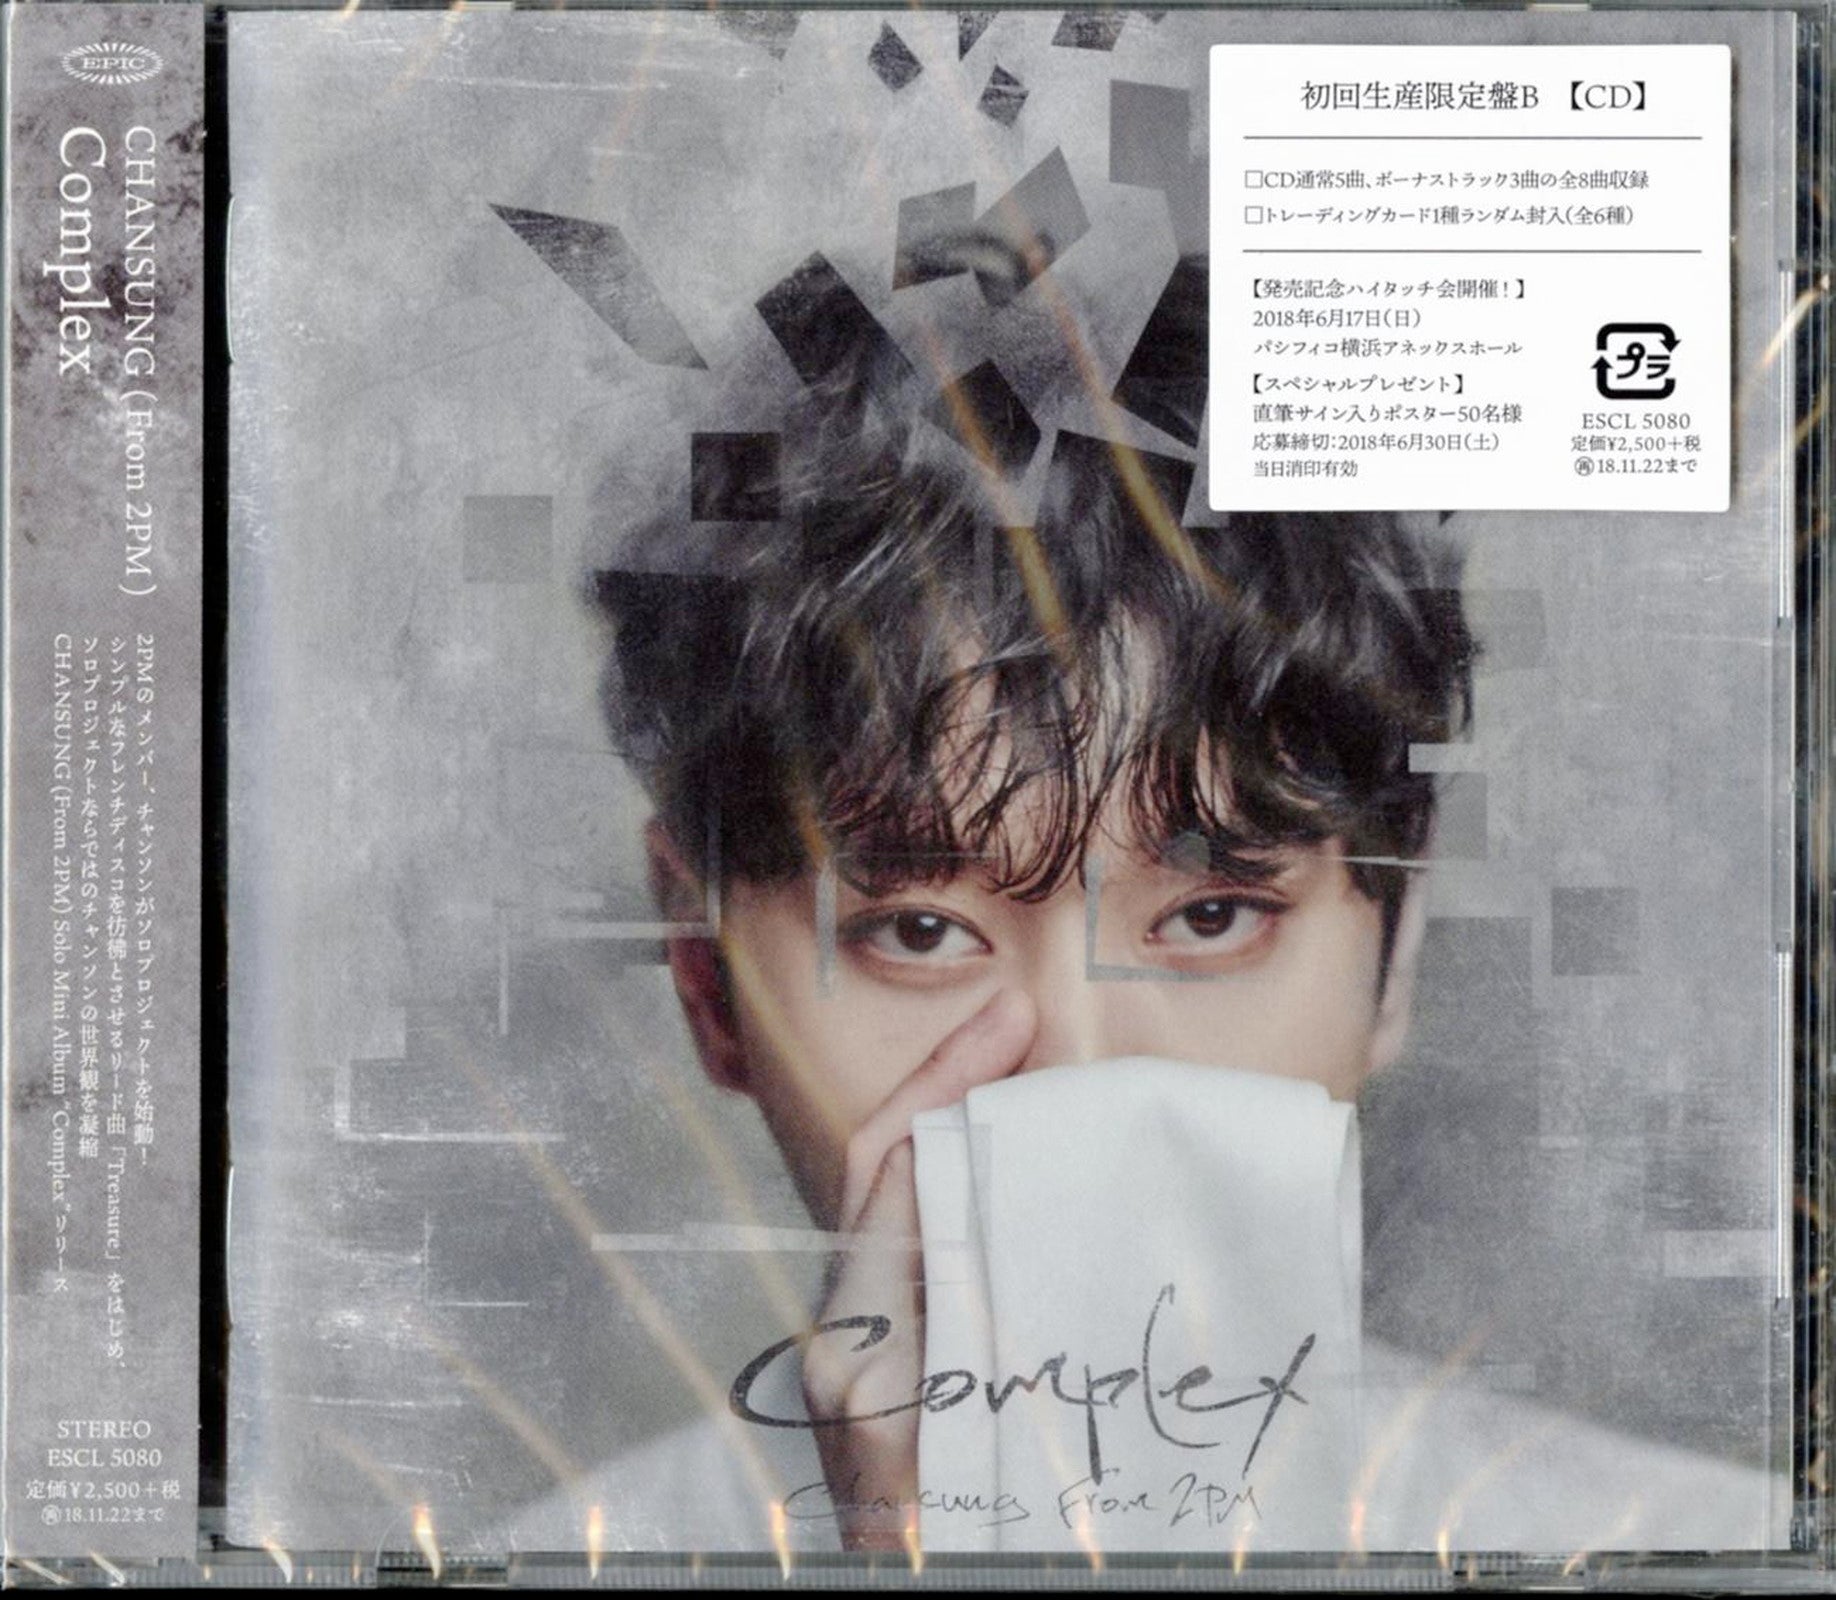 Chansung (From 2Pm) - Complex (Type-B) - Japan CD Bonus Track